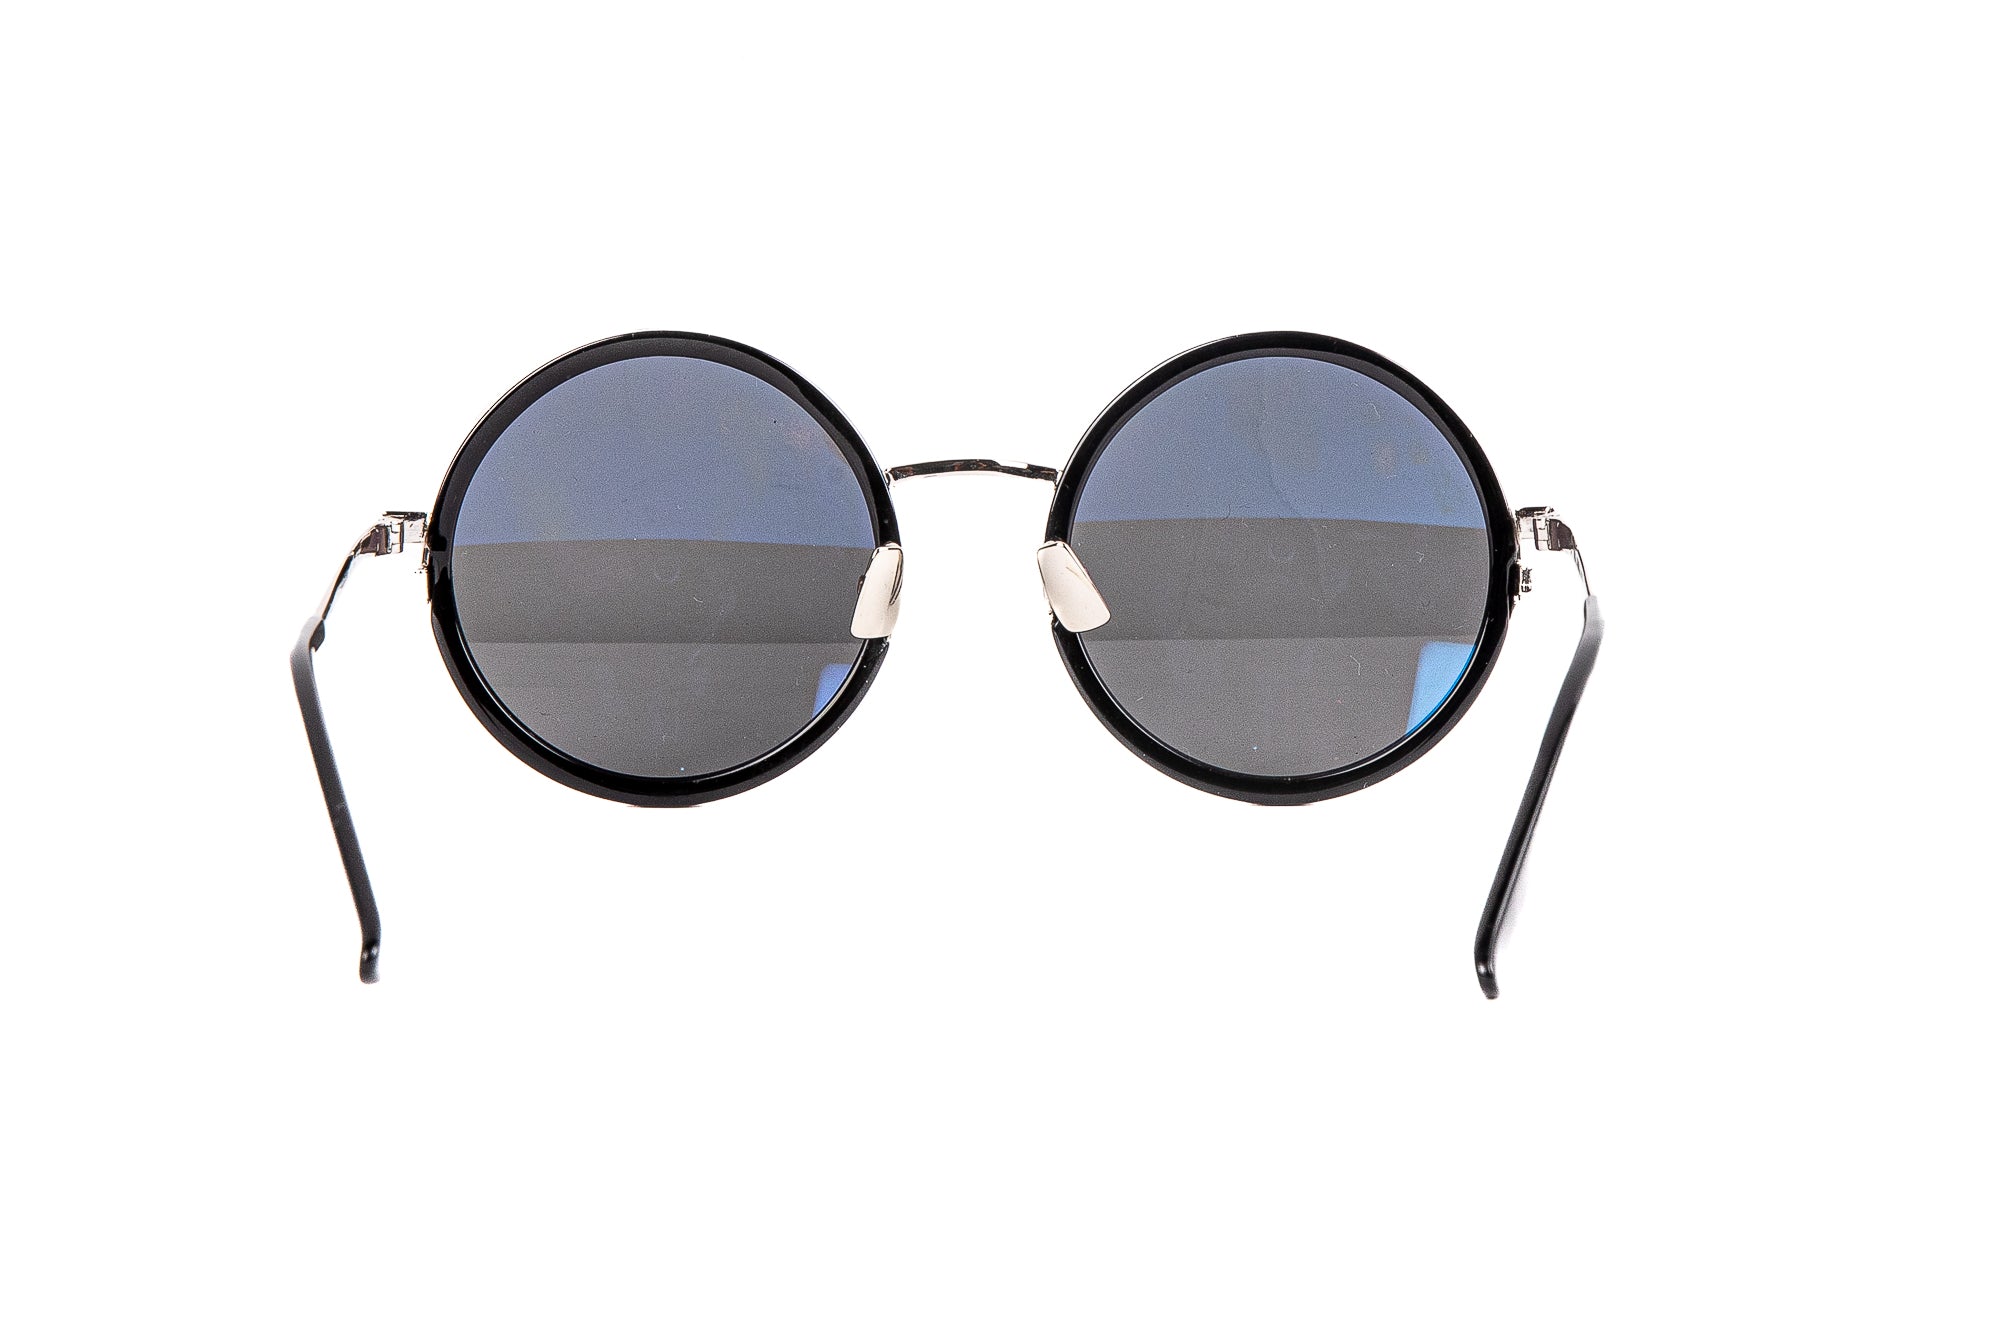 Sl 136 Combi Sunglasses